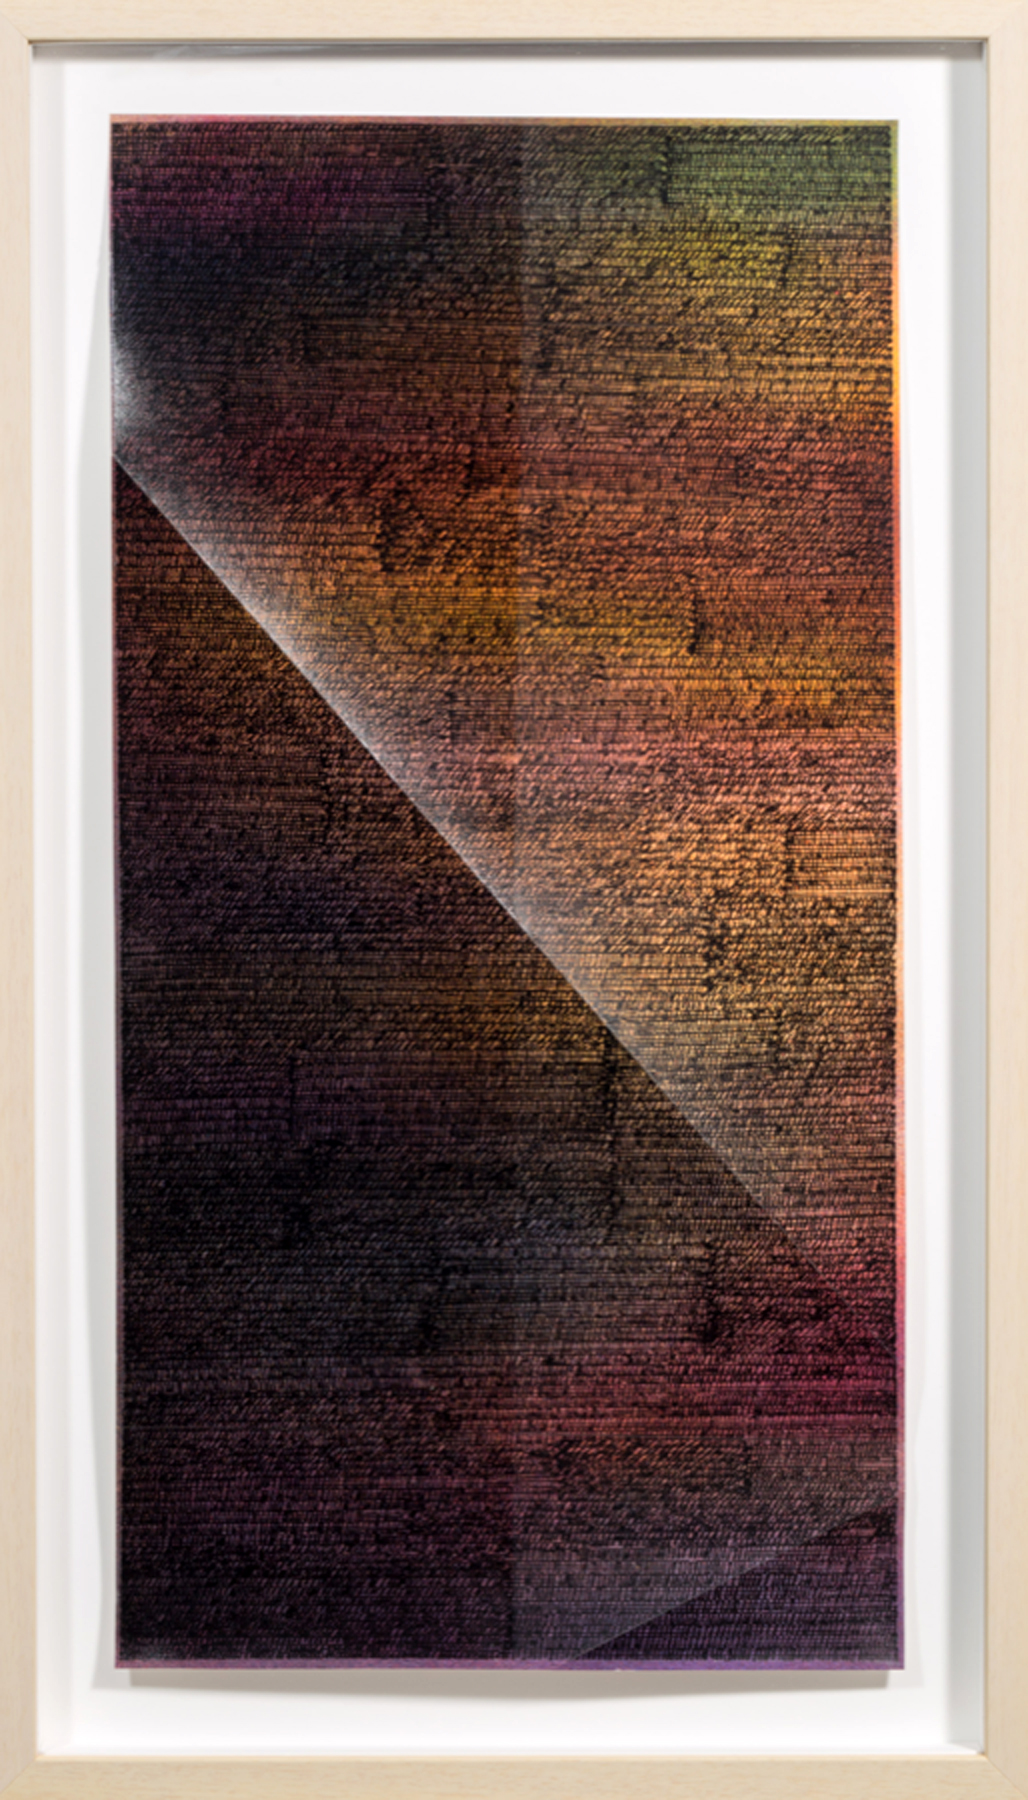 LINDSEY LANDFRIED | Splenetic, 25.75 x 13.25 inches / 65.5 x 33.5 cm, acrylic on folded paper, 2018